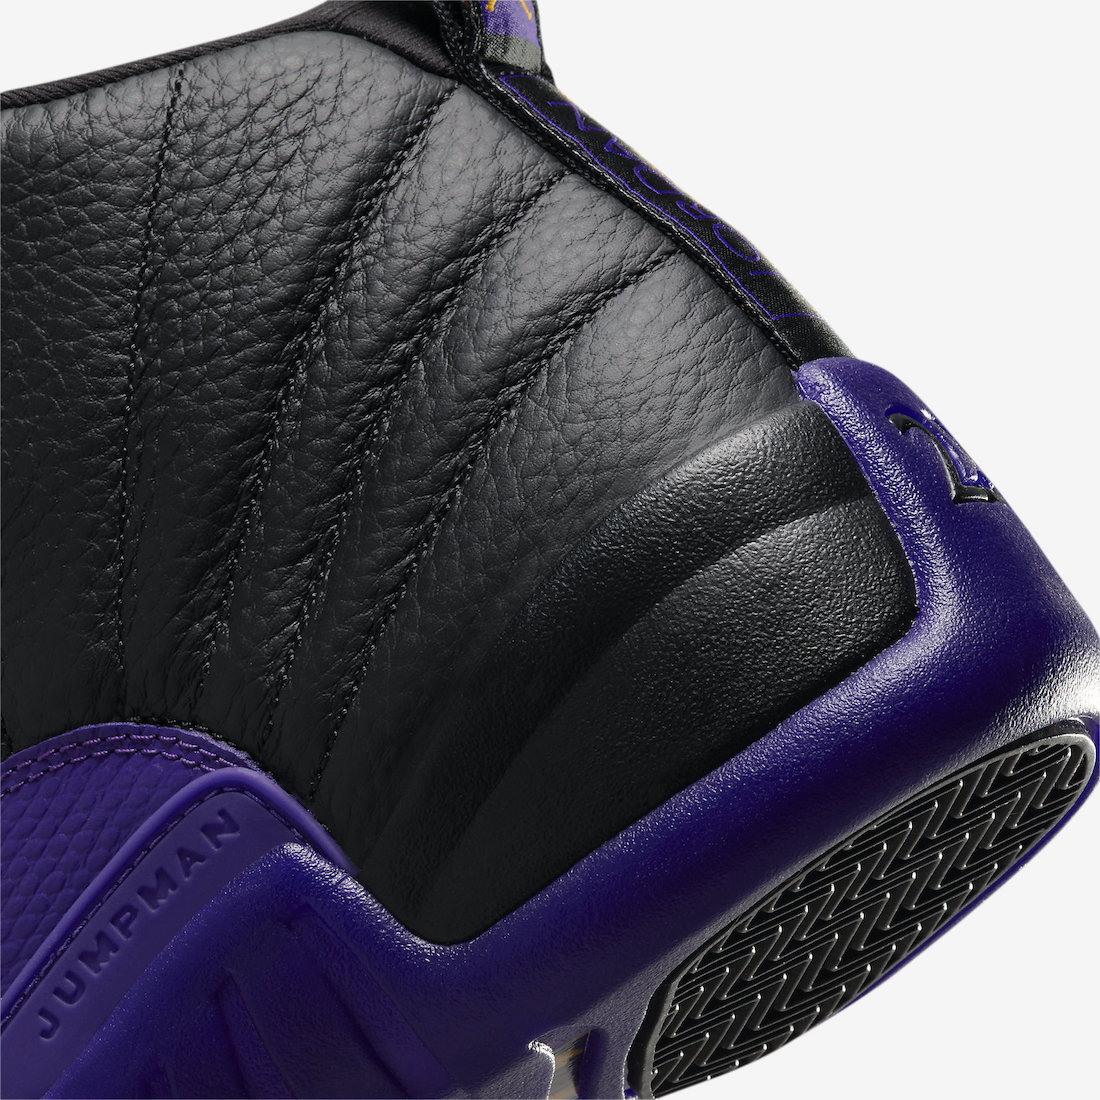 Official Look At The Air Jordan 12 Retro “Field Purple”